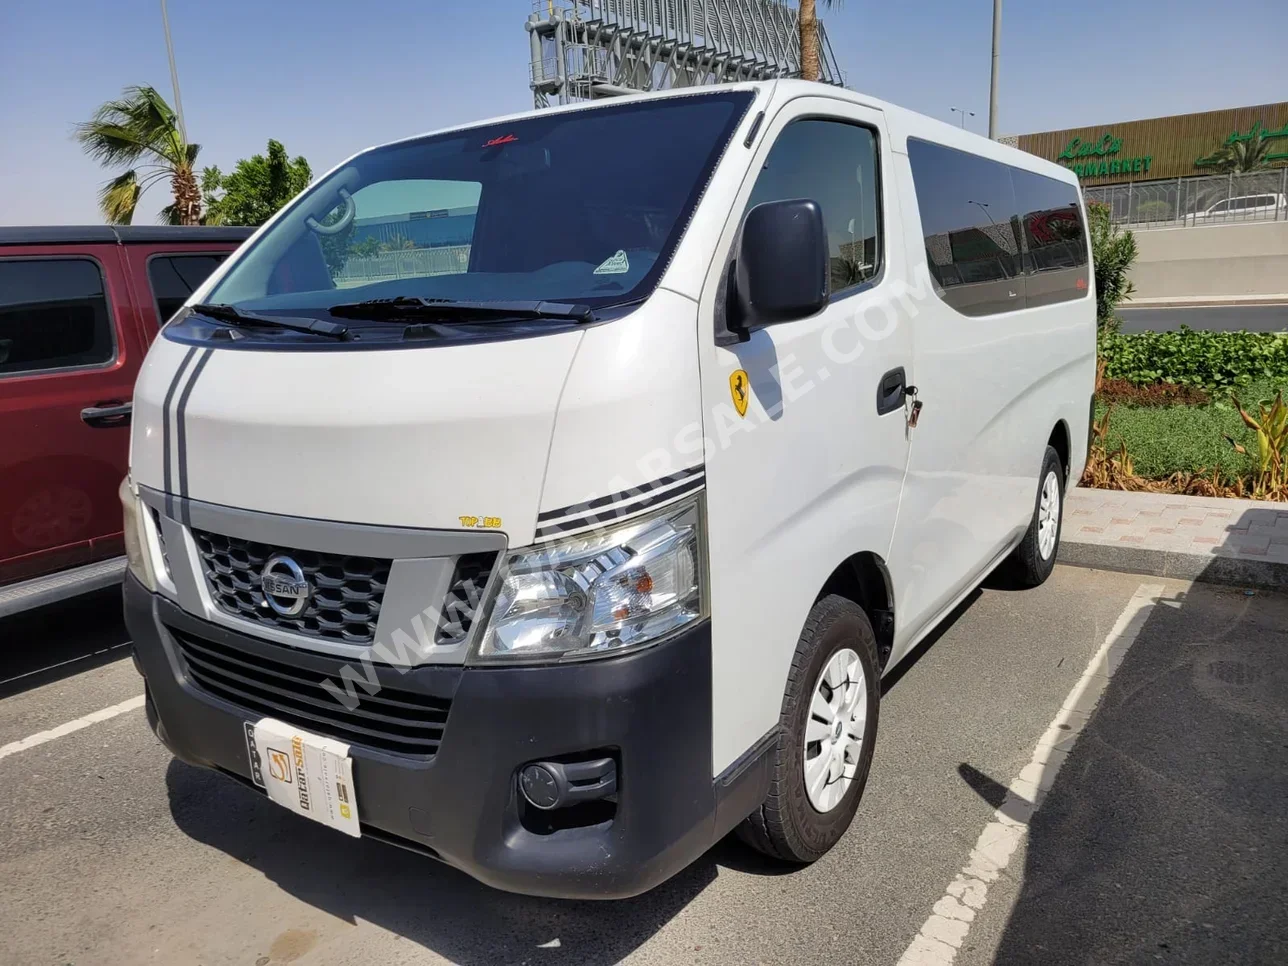 Nissan  Urvan  2013  Manual  327,000 Km  4 Cylinder  Front Wheel Drive (FWD)  Van / Bus  White